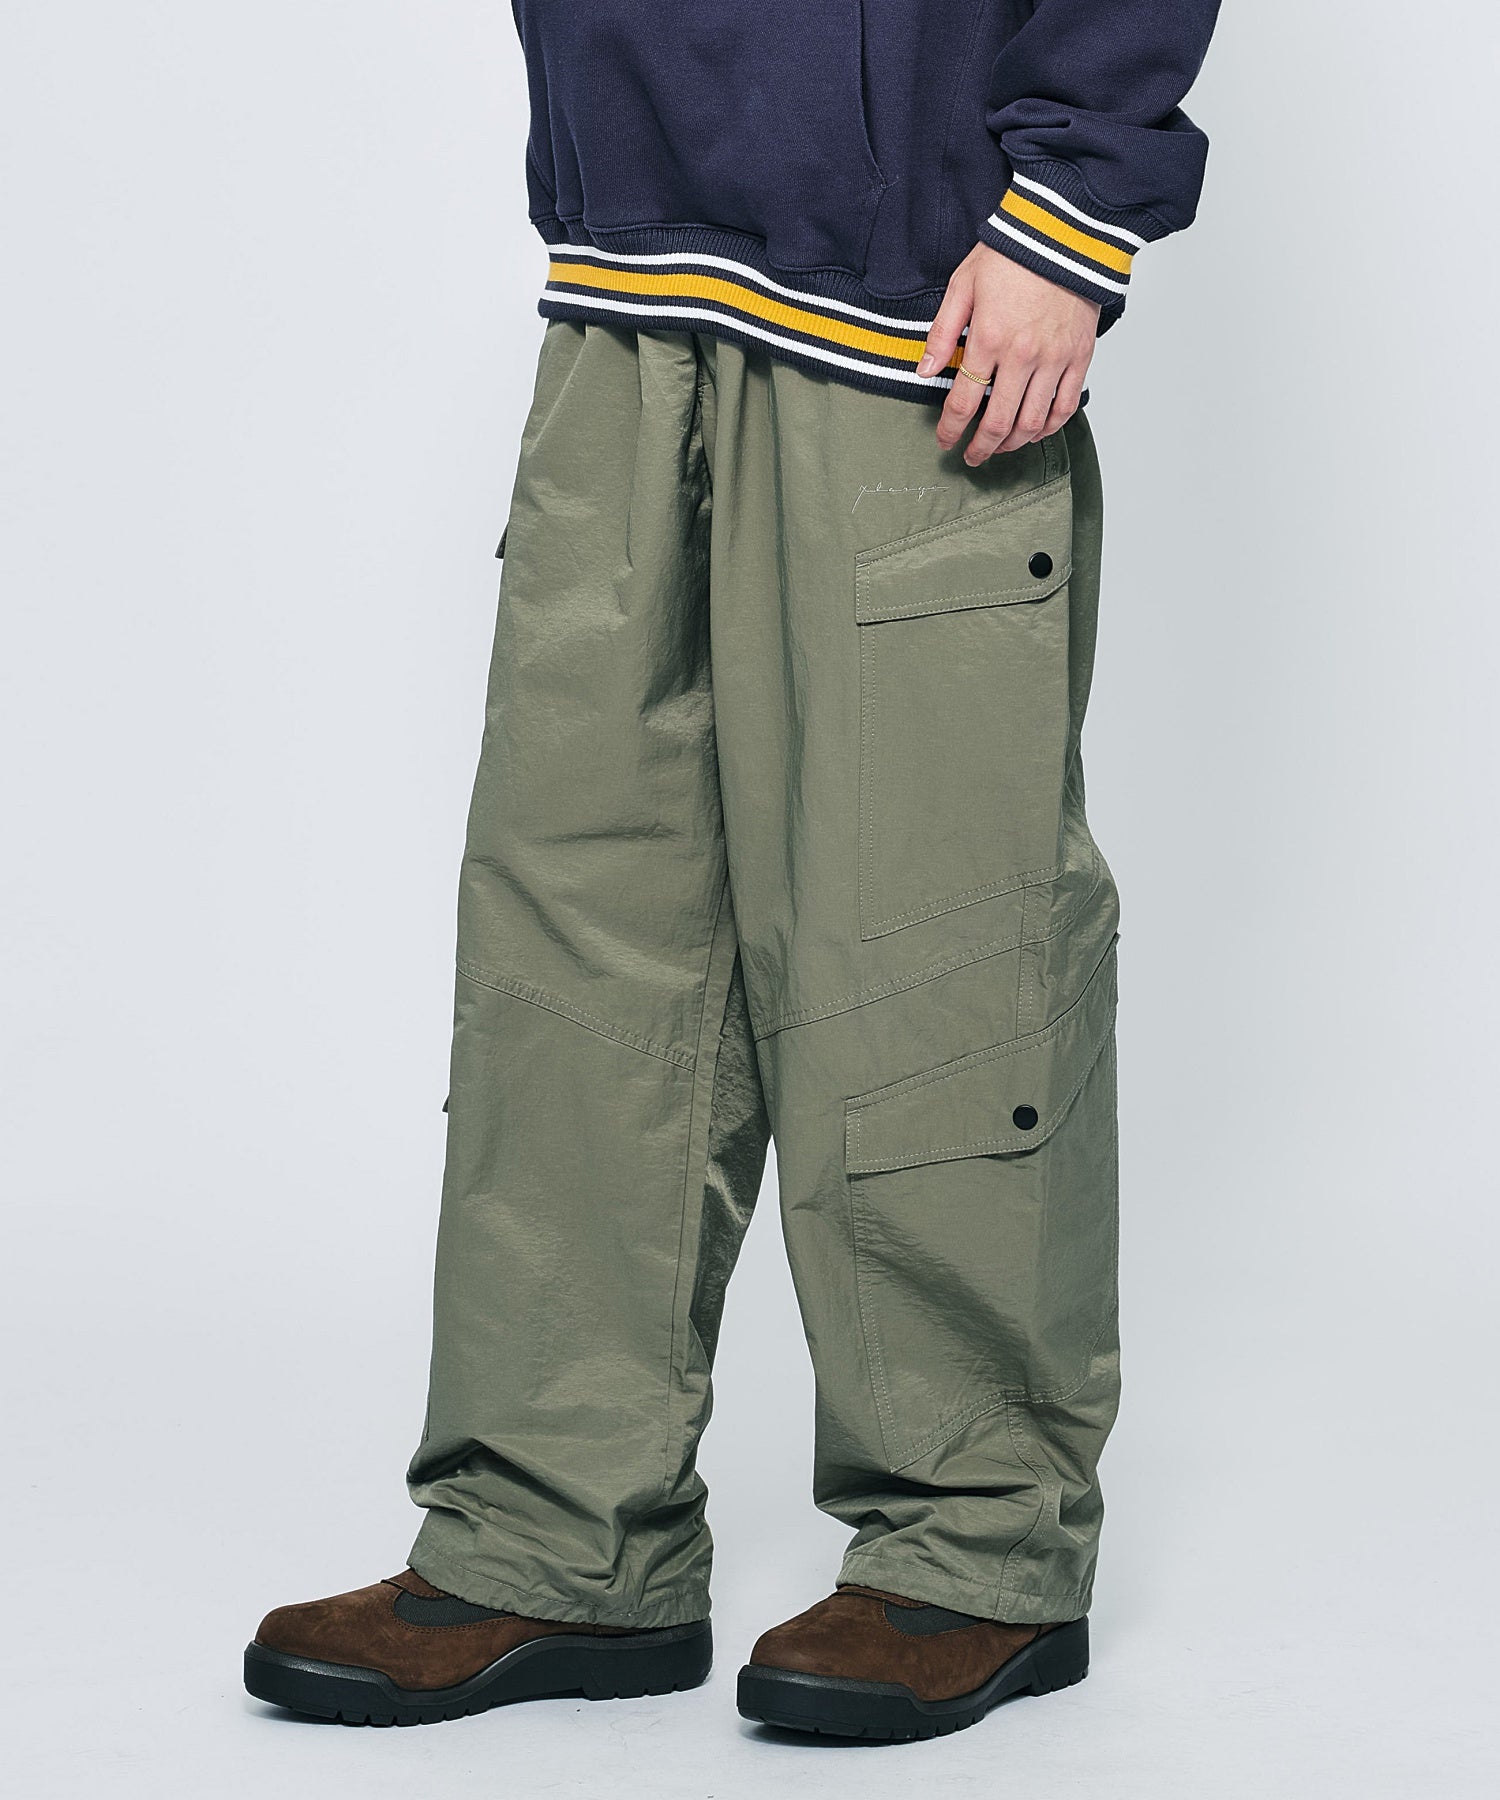 Hvyesh Cargo Pants for Women Ladies Street Style Fashion Design